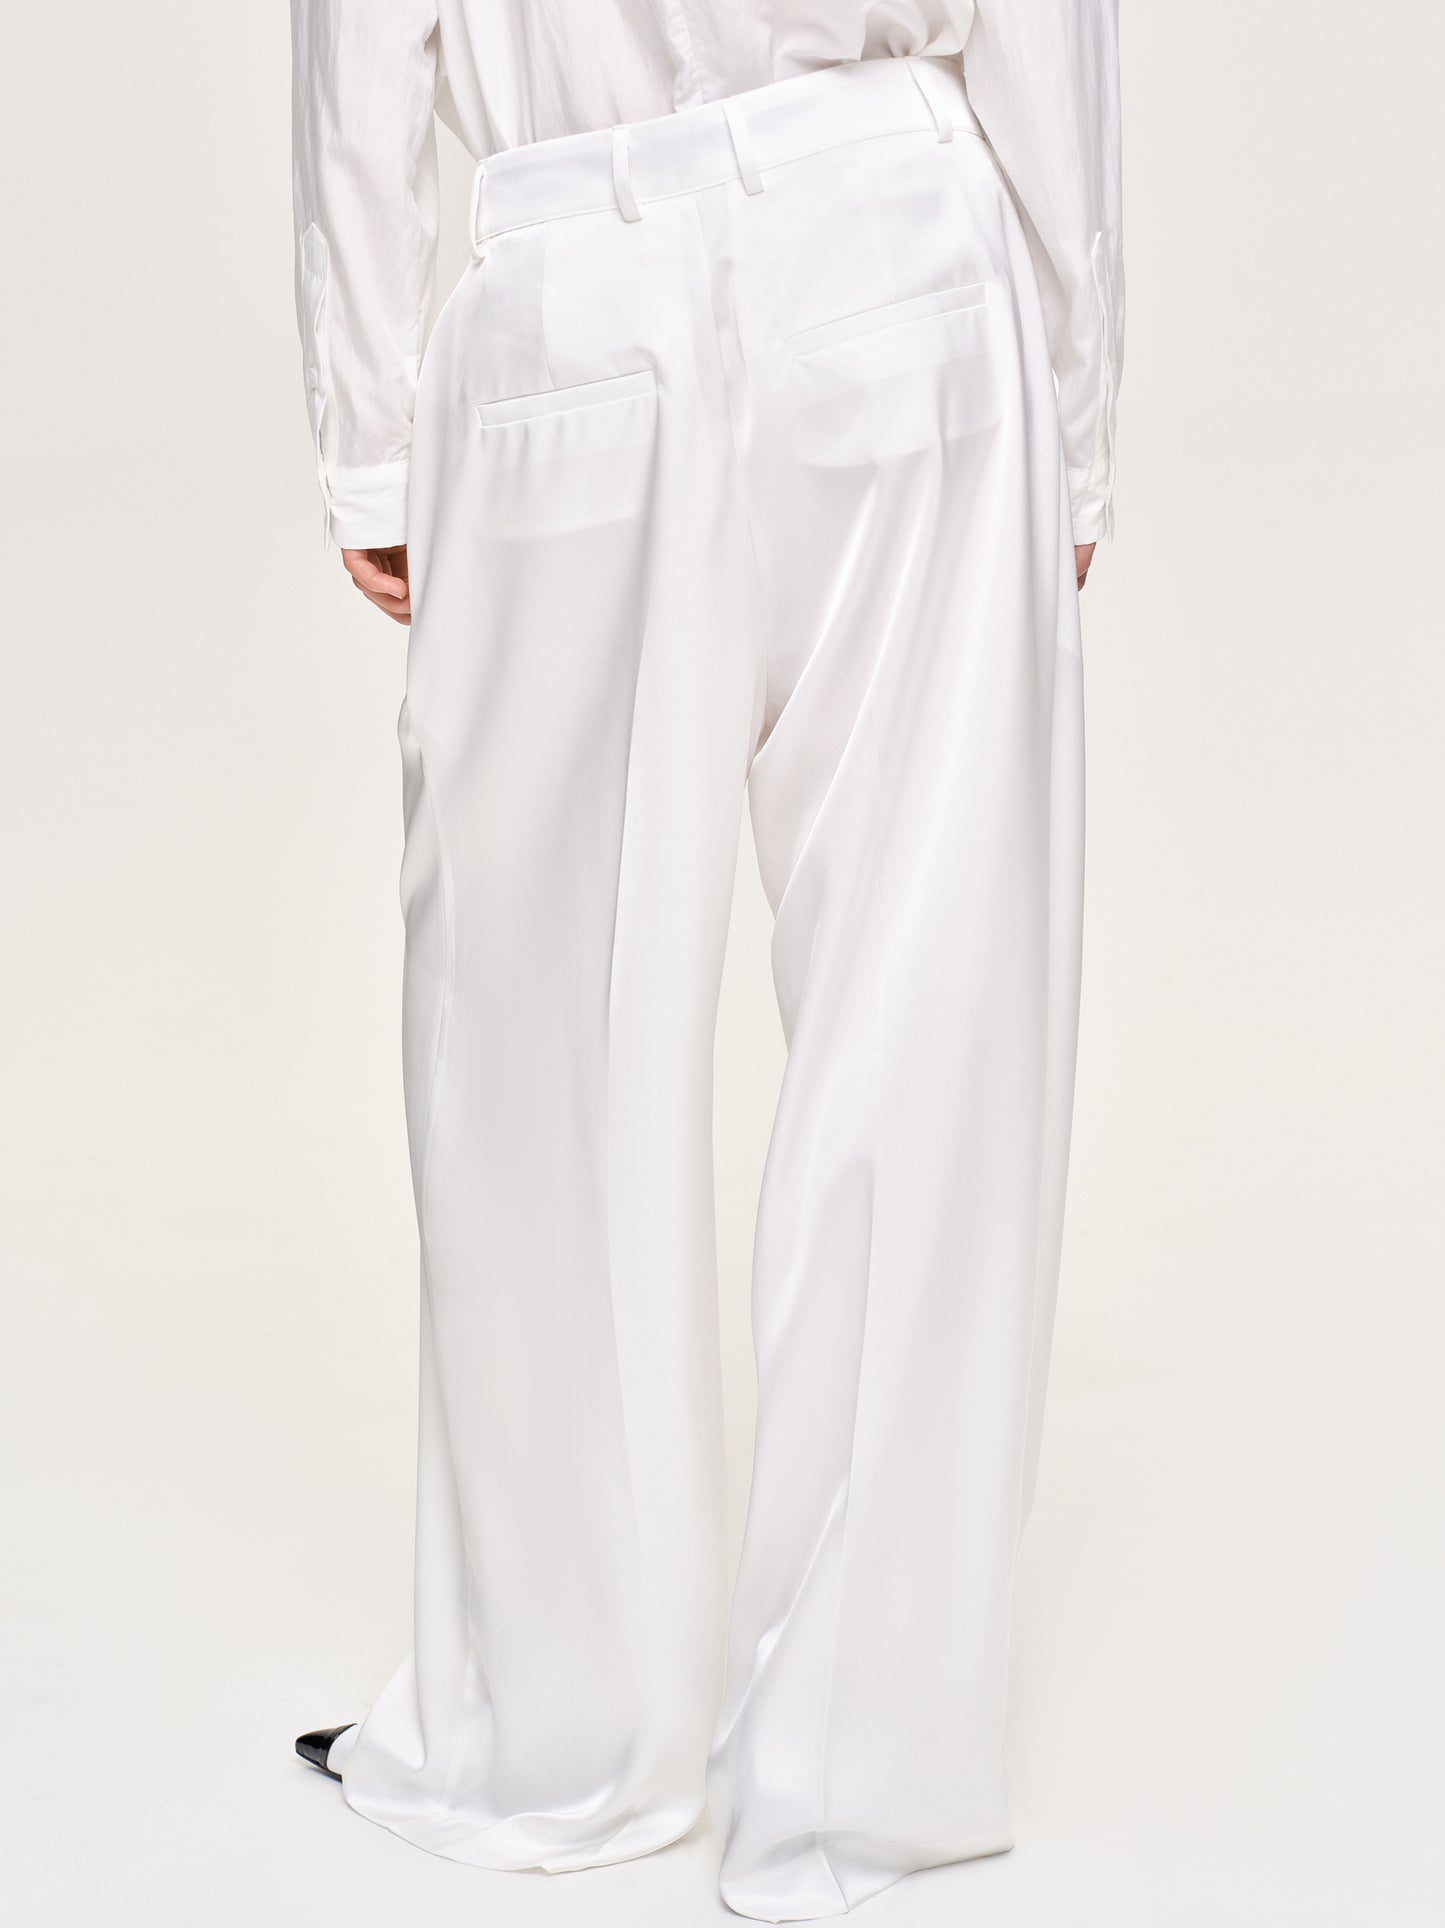 Taiamo Fluid Satin Trousers, White